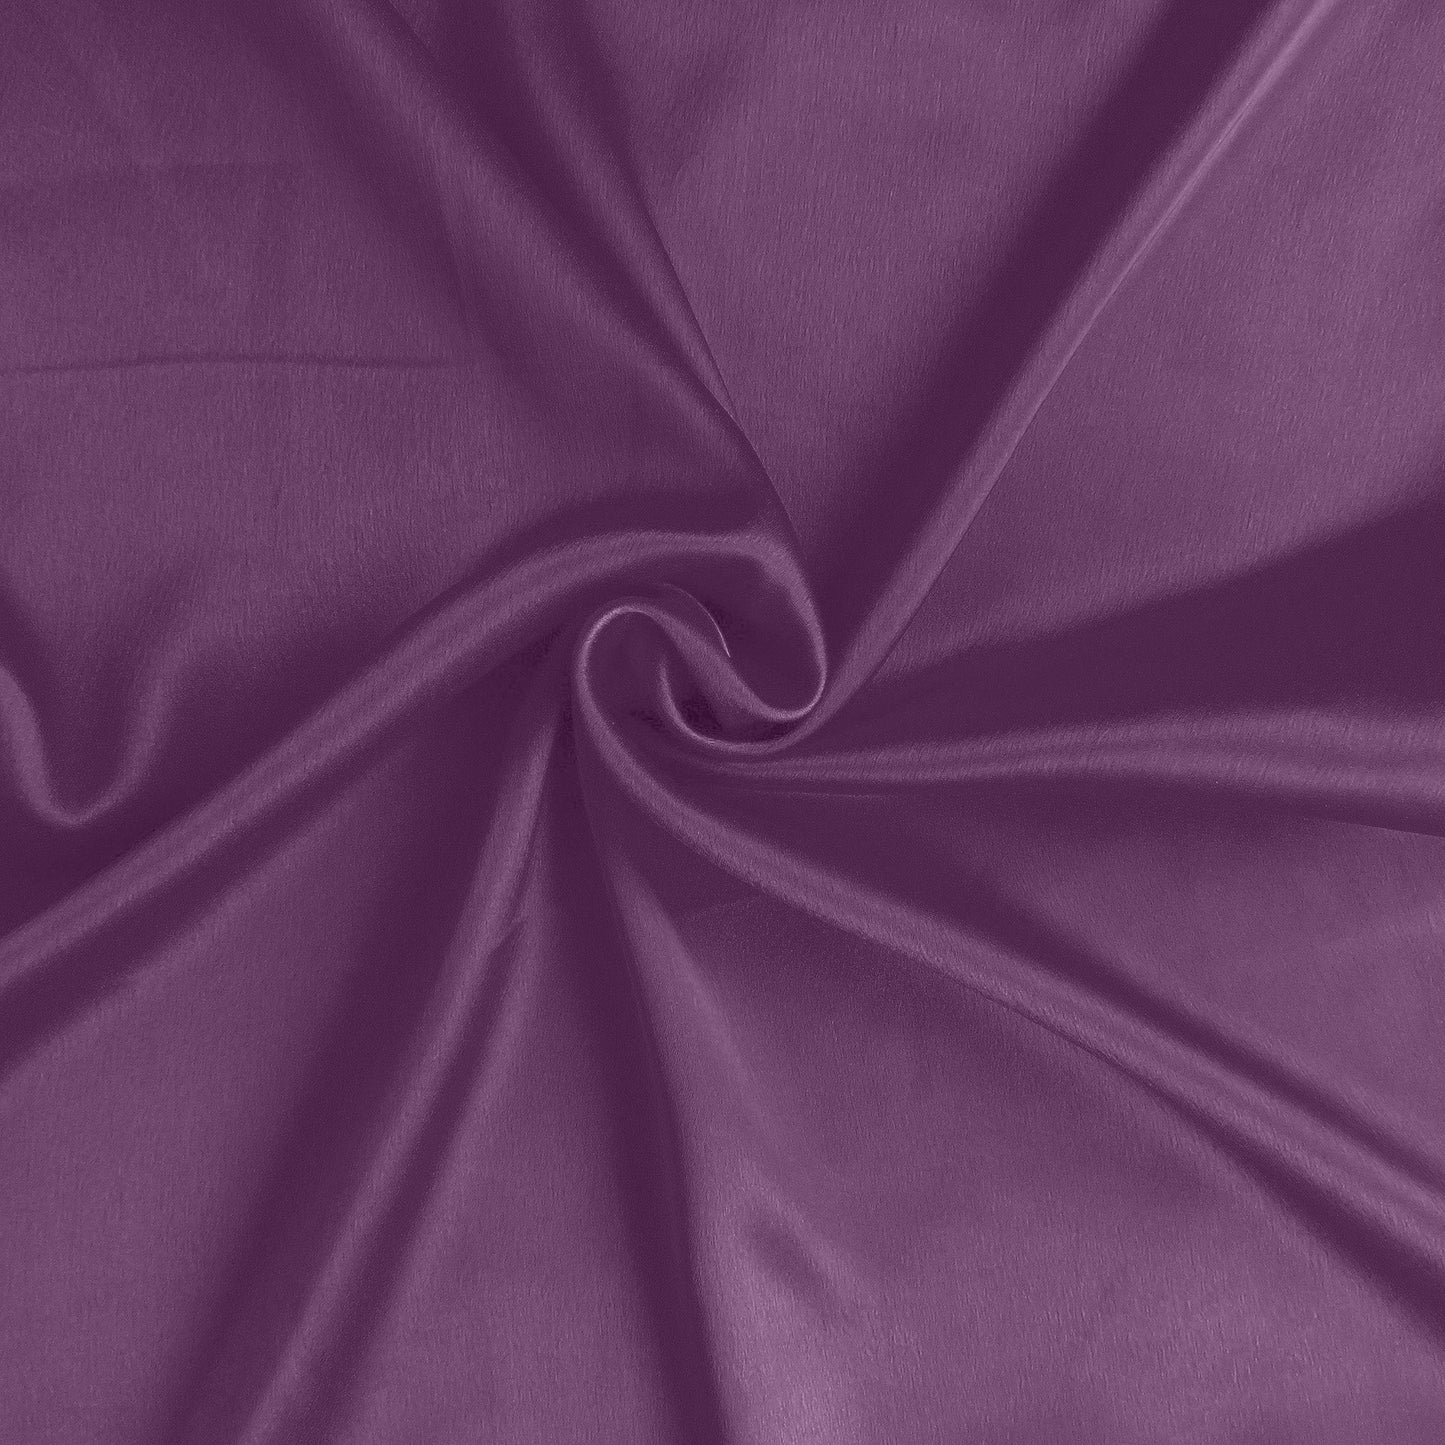 Luxury Soft Plain Satin Silk Pillowcases in Set of 2 - Purple Passion